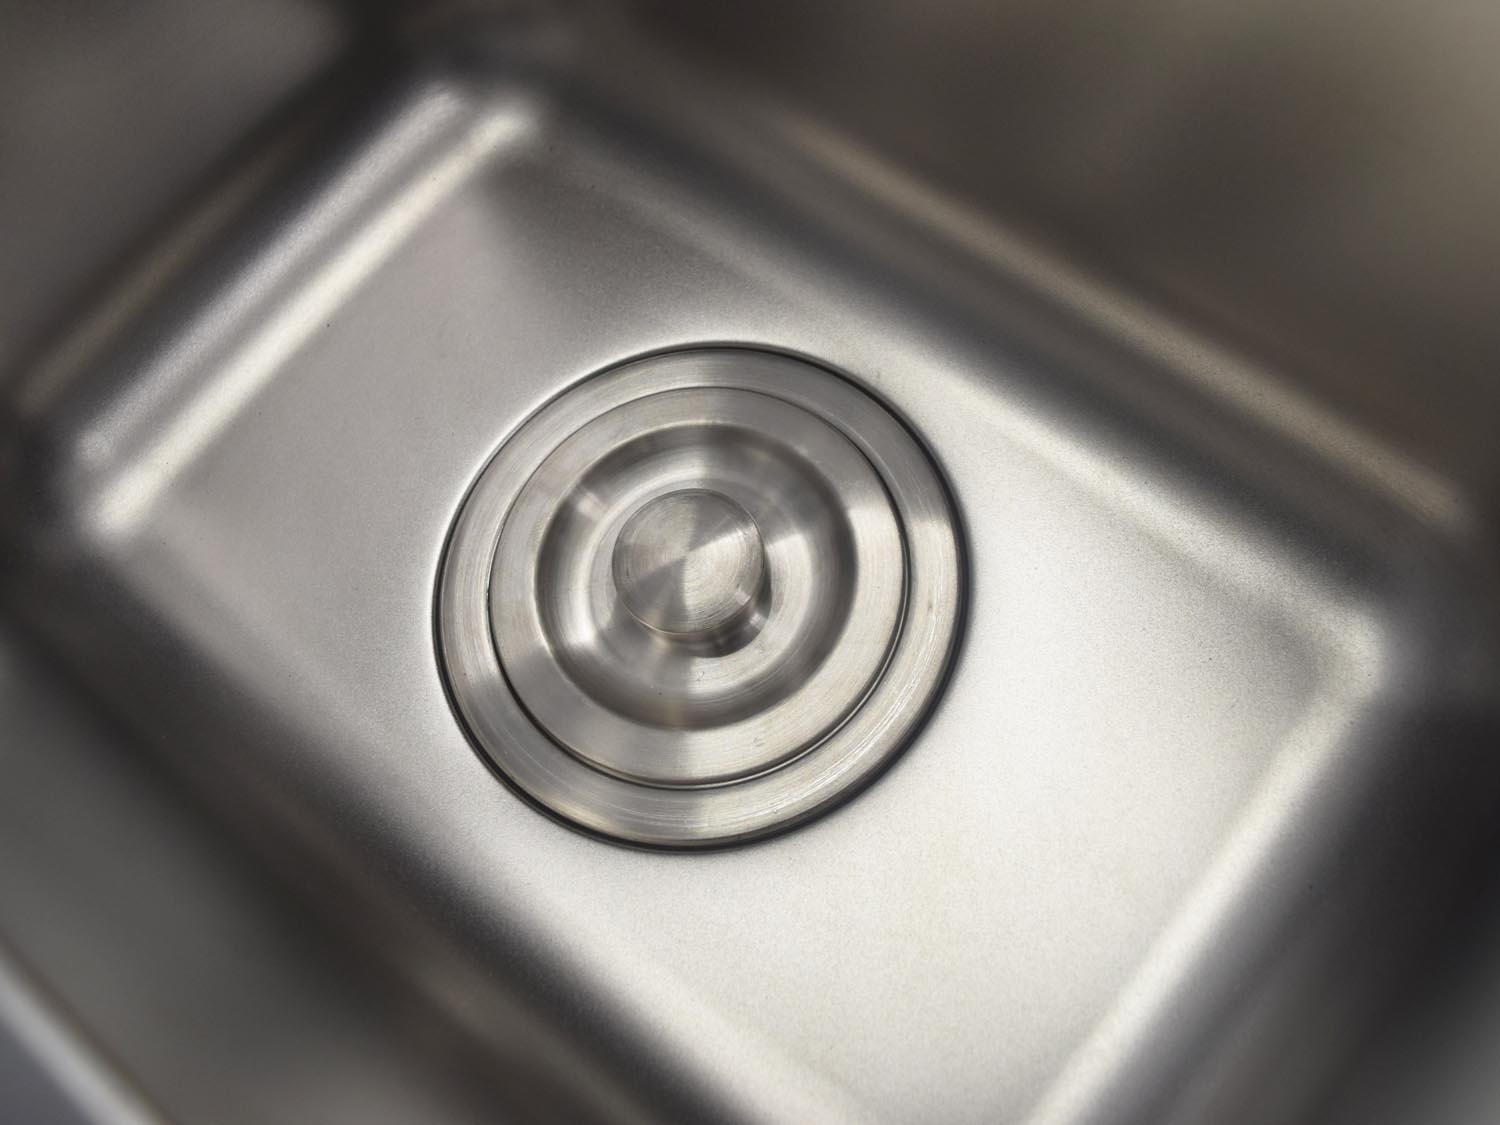 Contempo Stainless Steel Kitchen Sink Drain